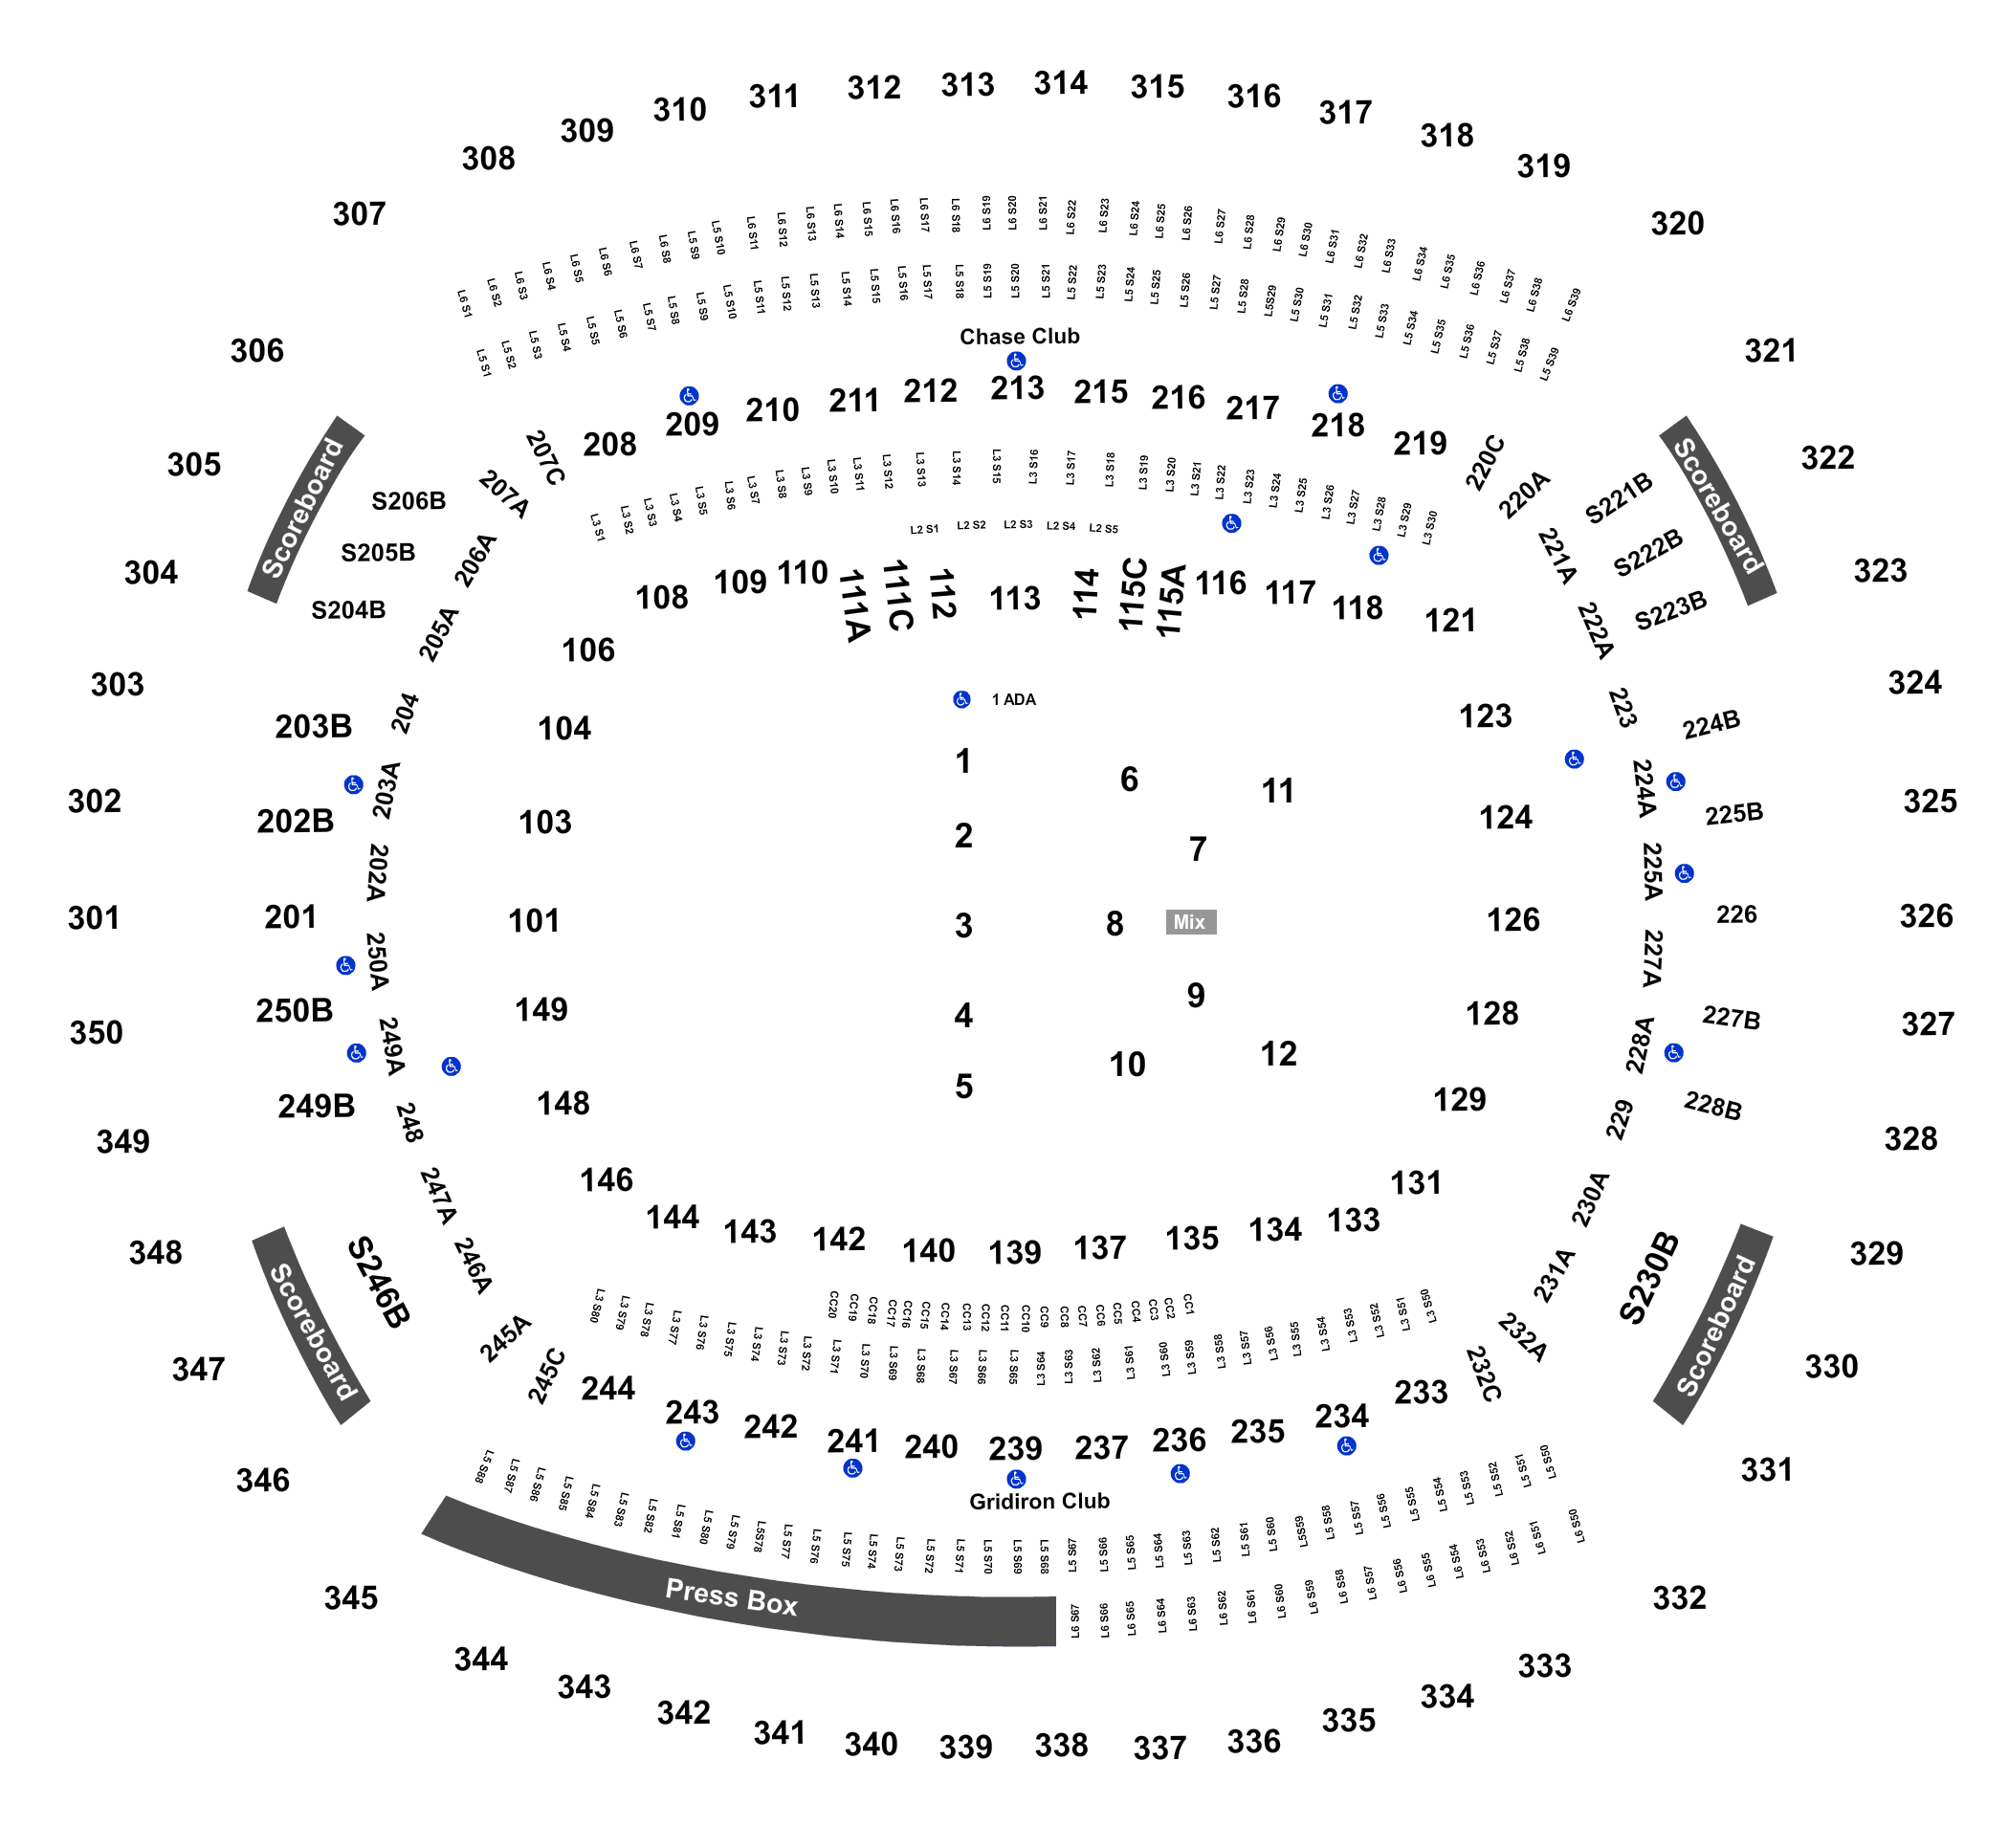 MetLife Stadium Seating Charts 